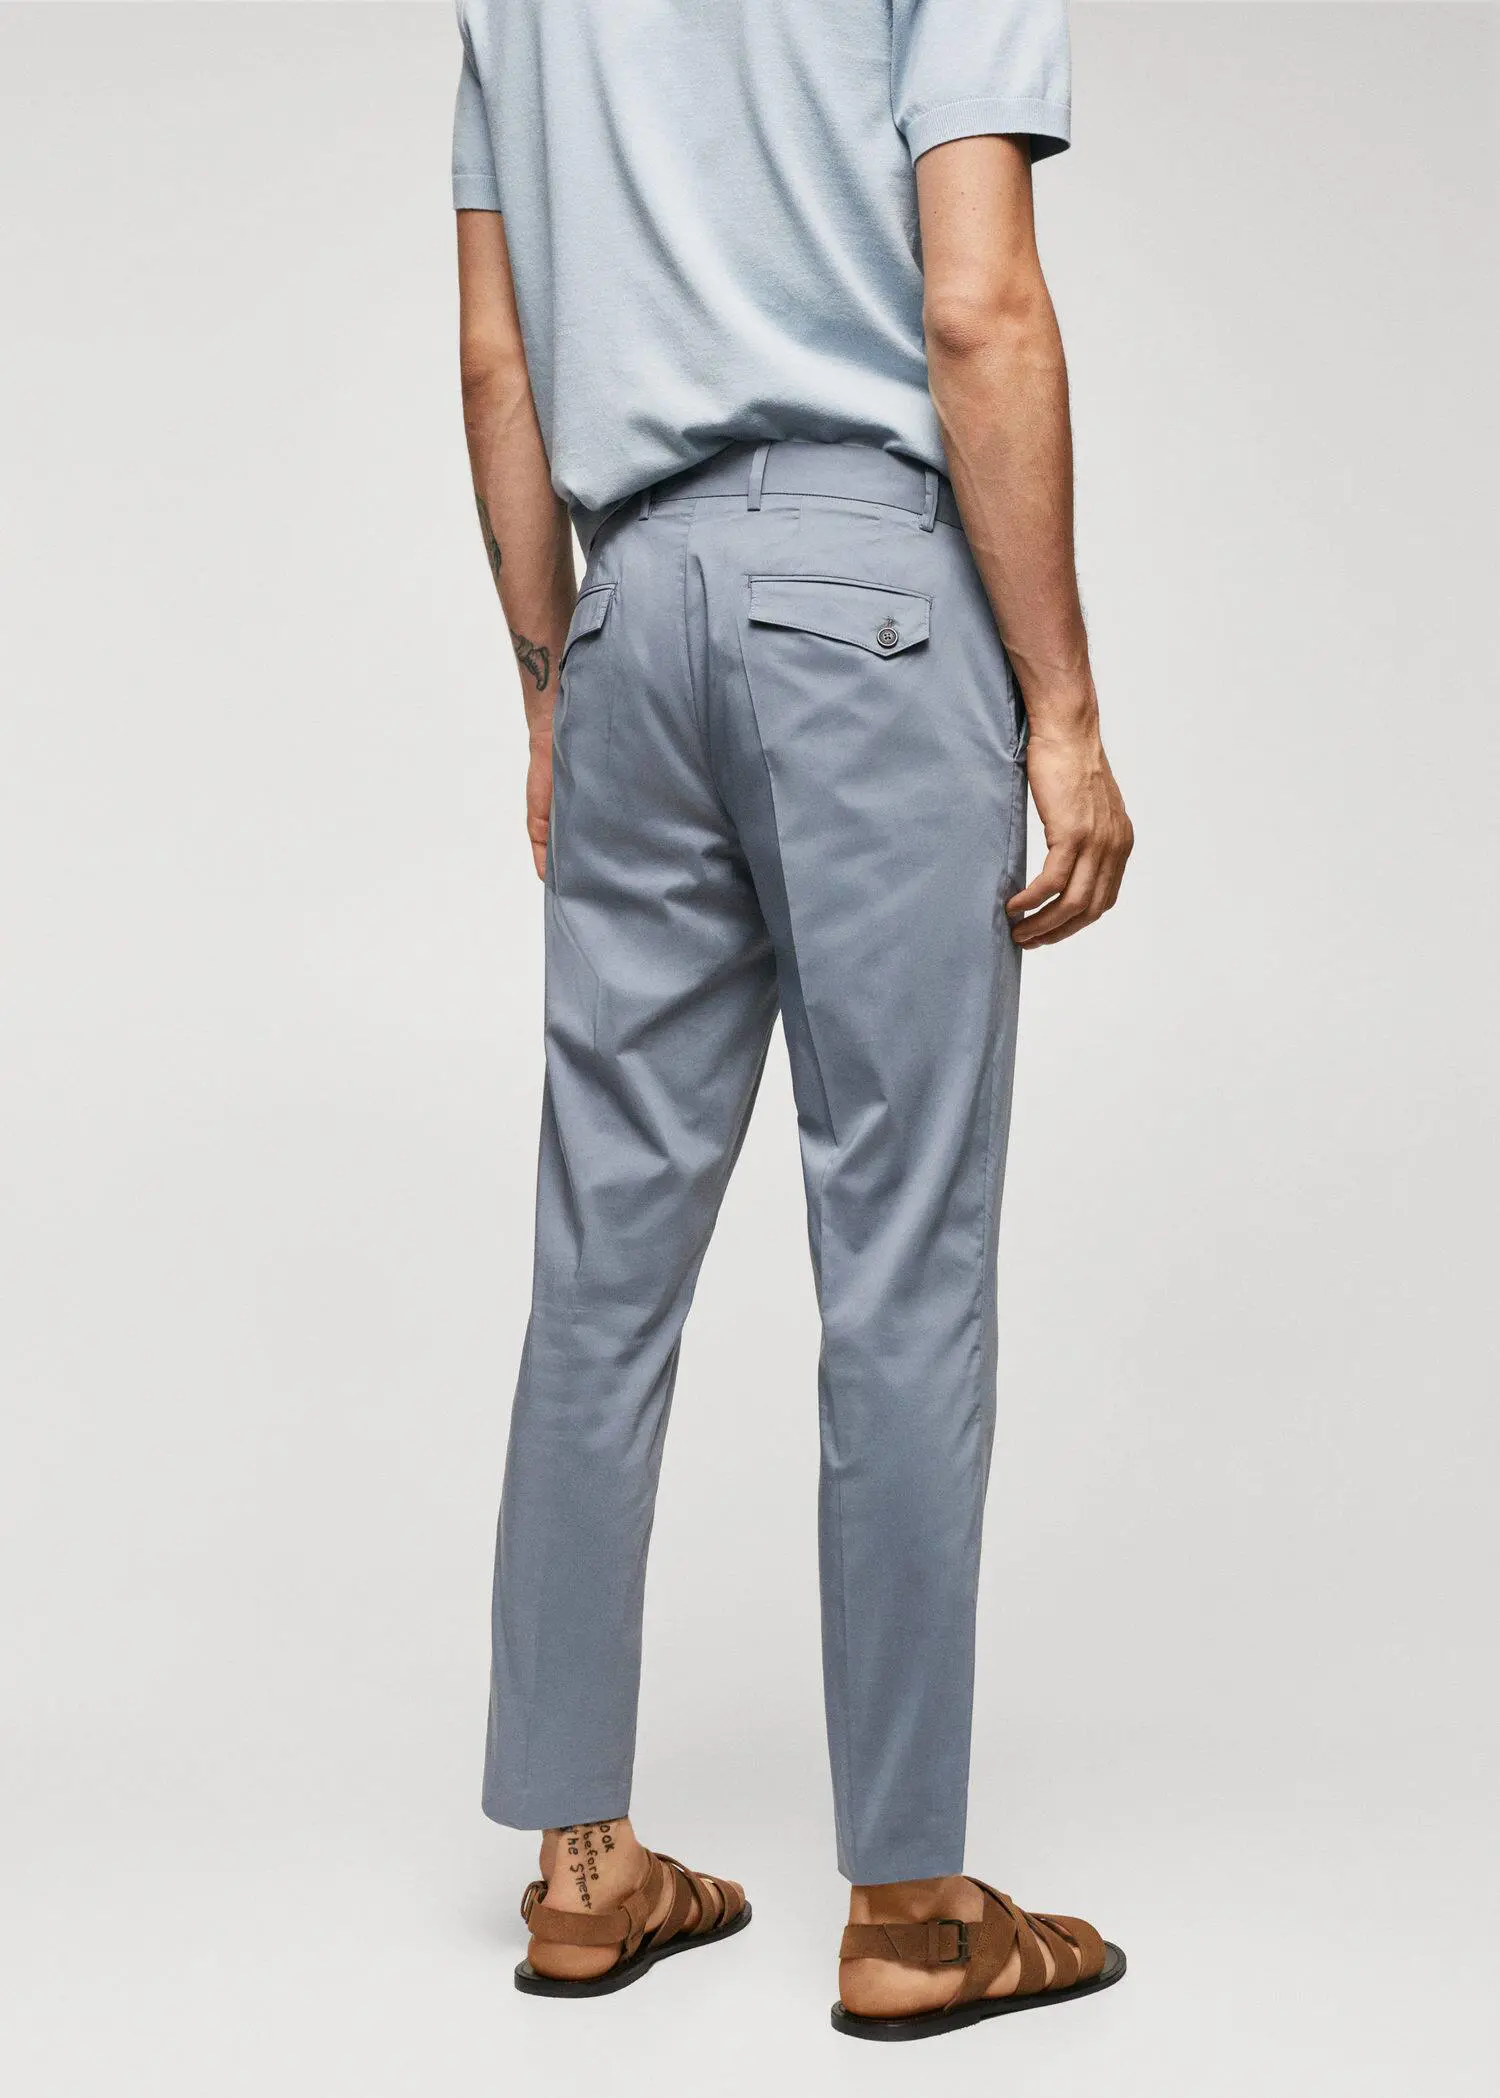 Mango Lightweight cotton trousers. a man wearing a blue shirt and gray pants. 